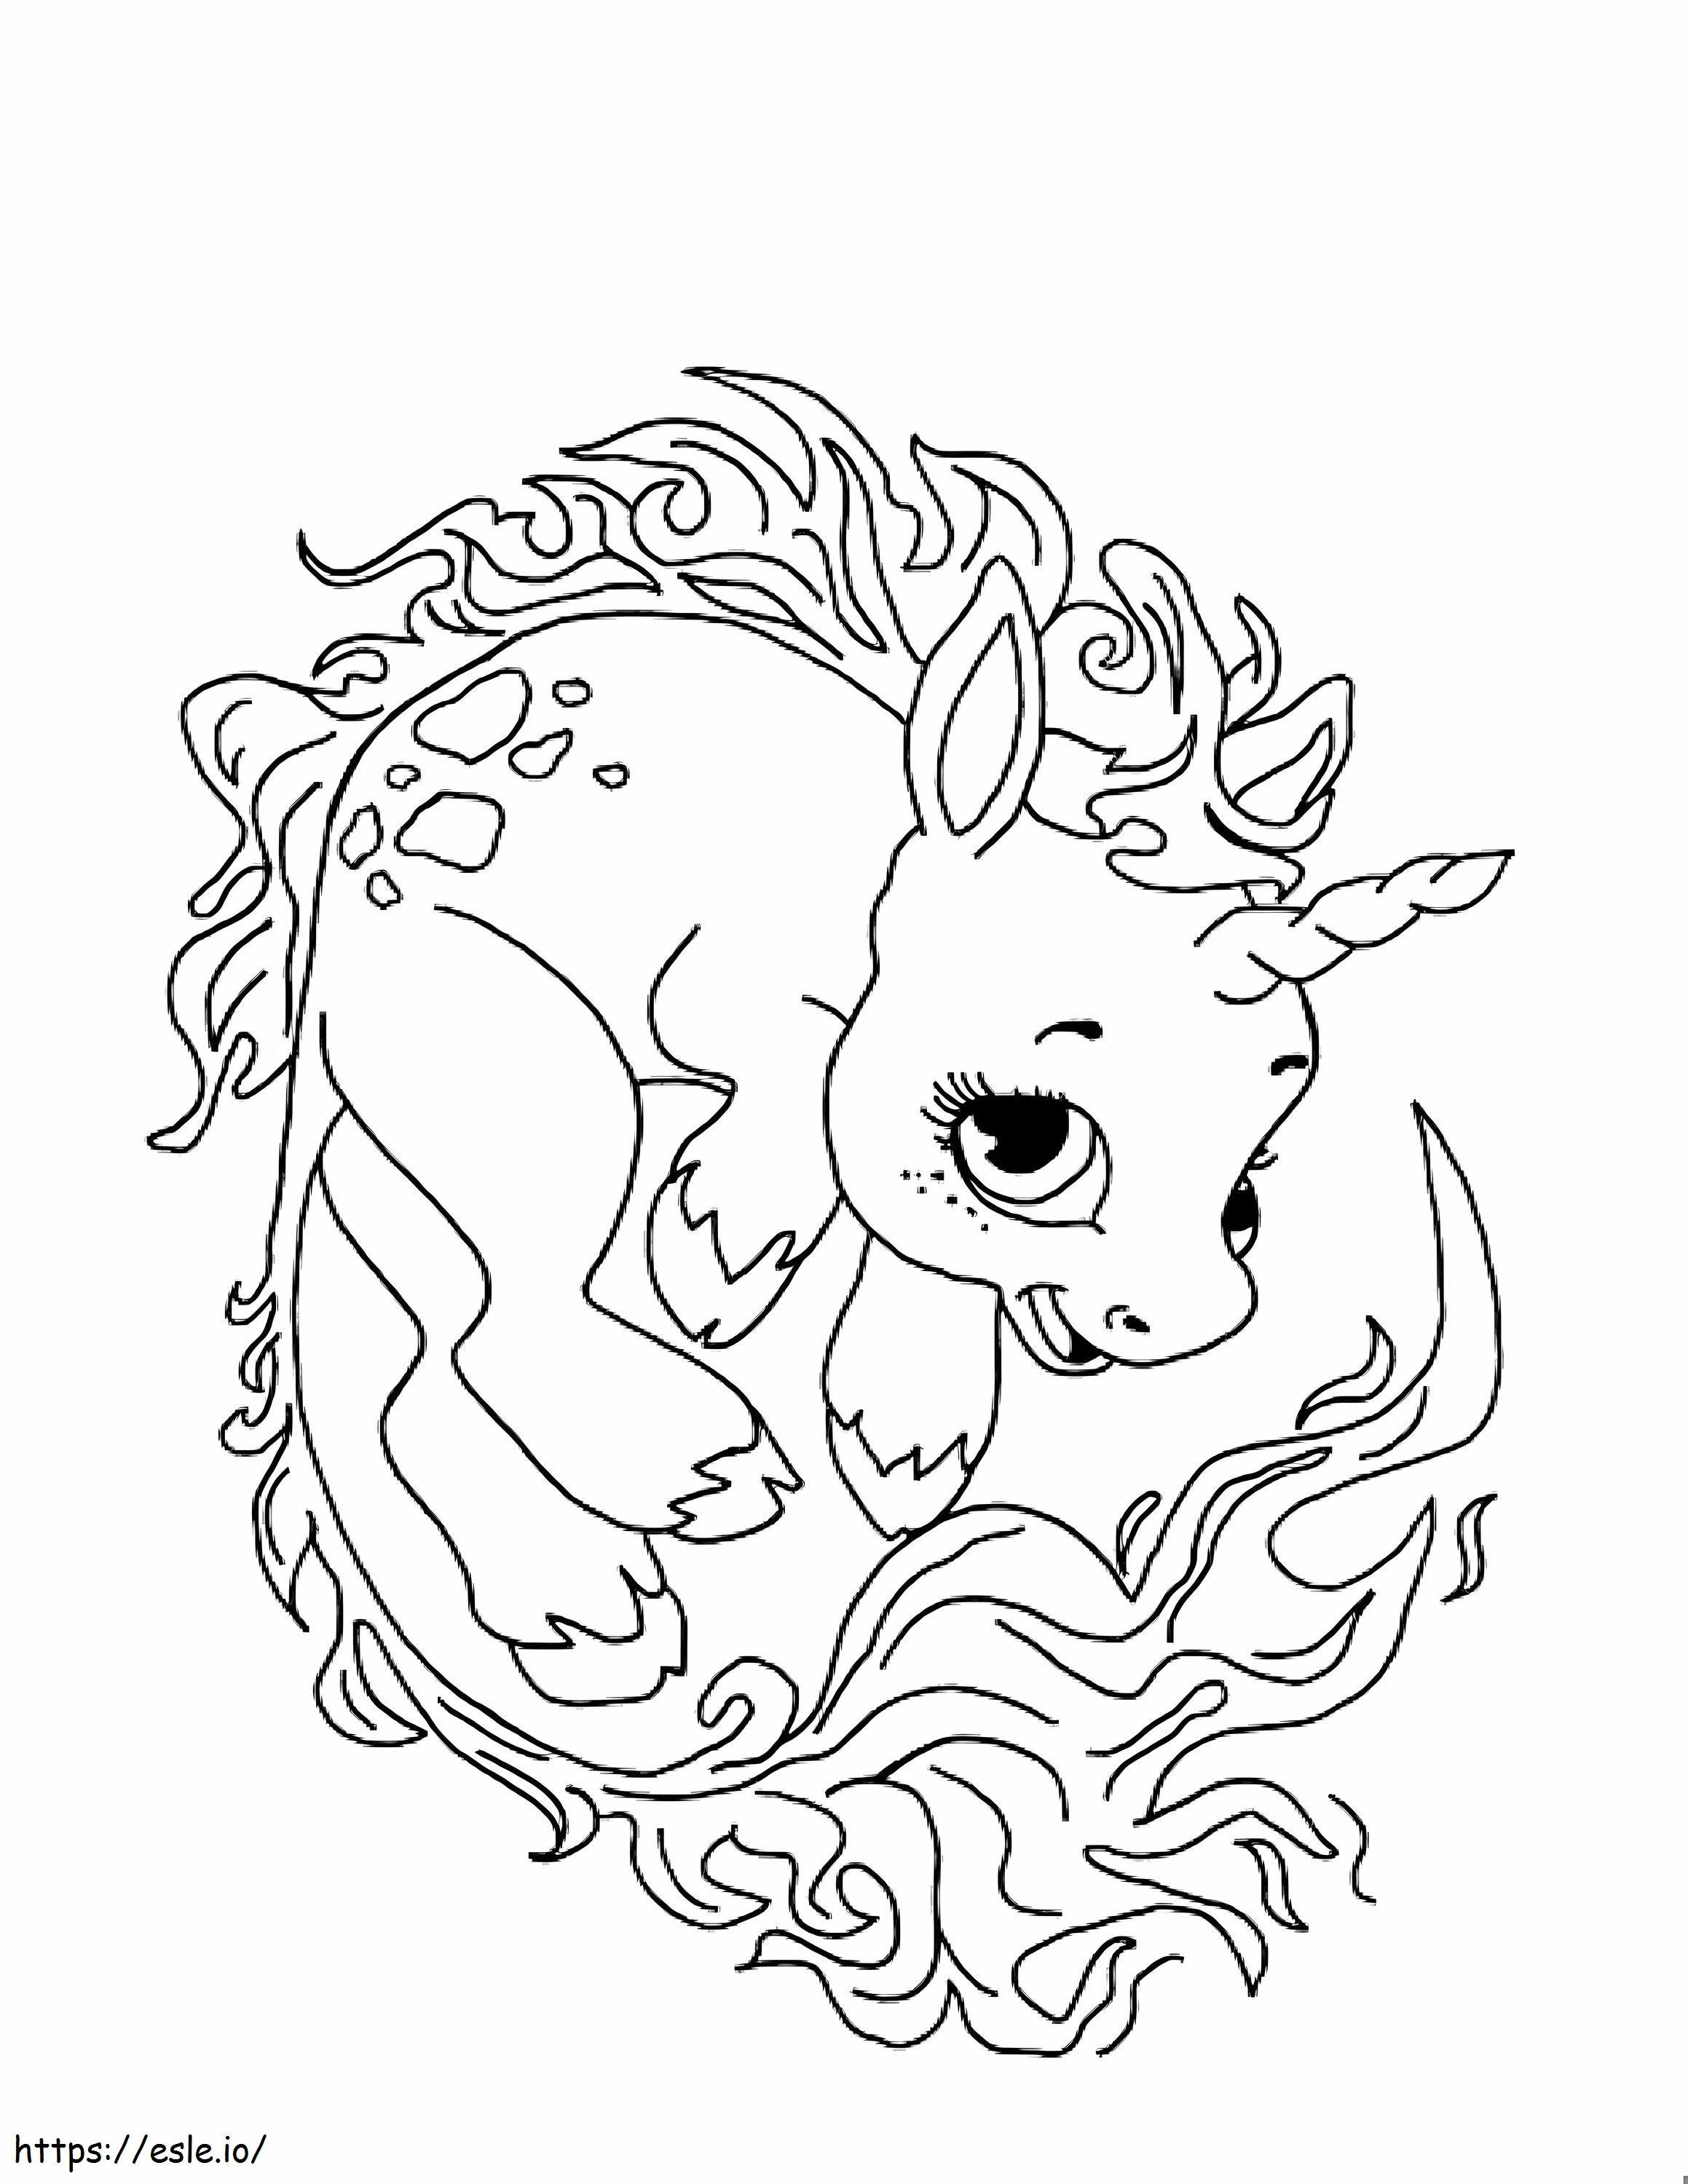 1528875949 Cute Unicorn coloring page